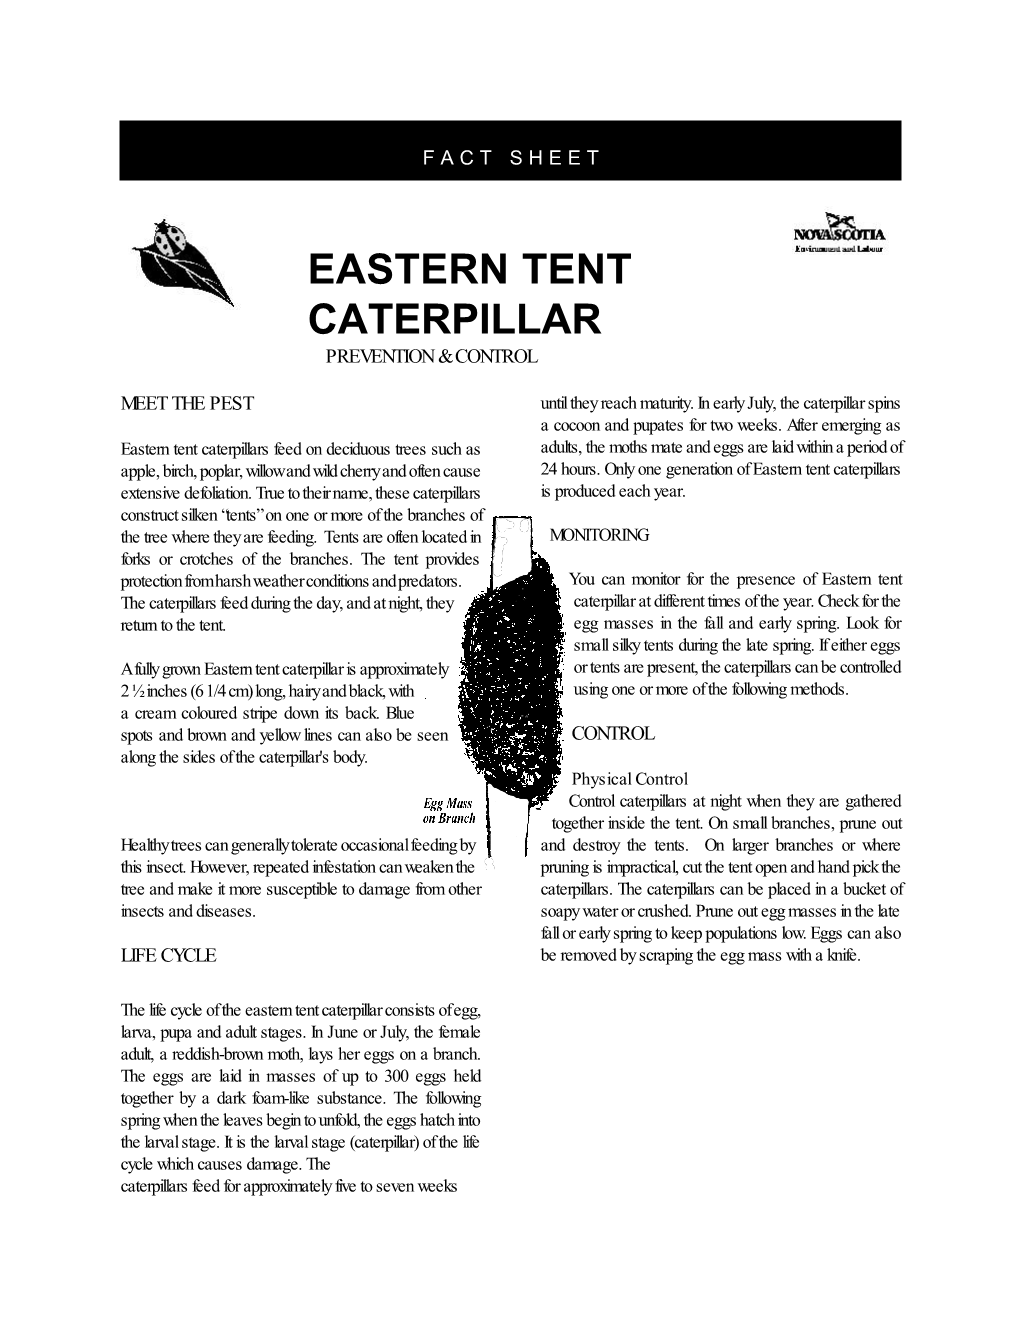 Eastern Tent Caterpillar Prevention & Control